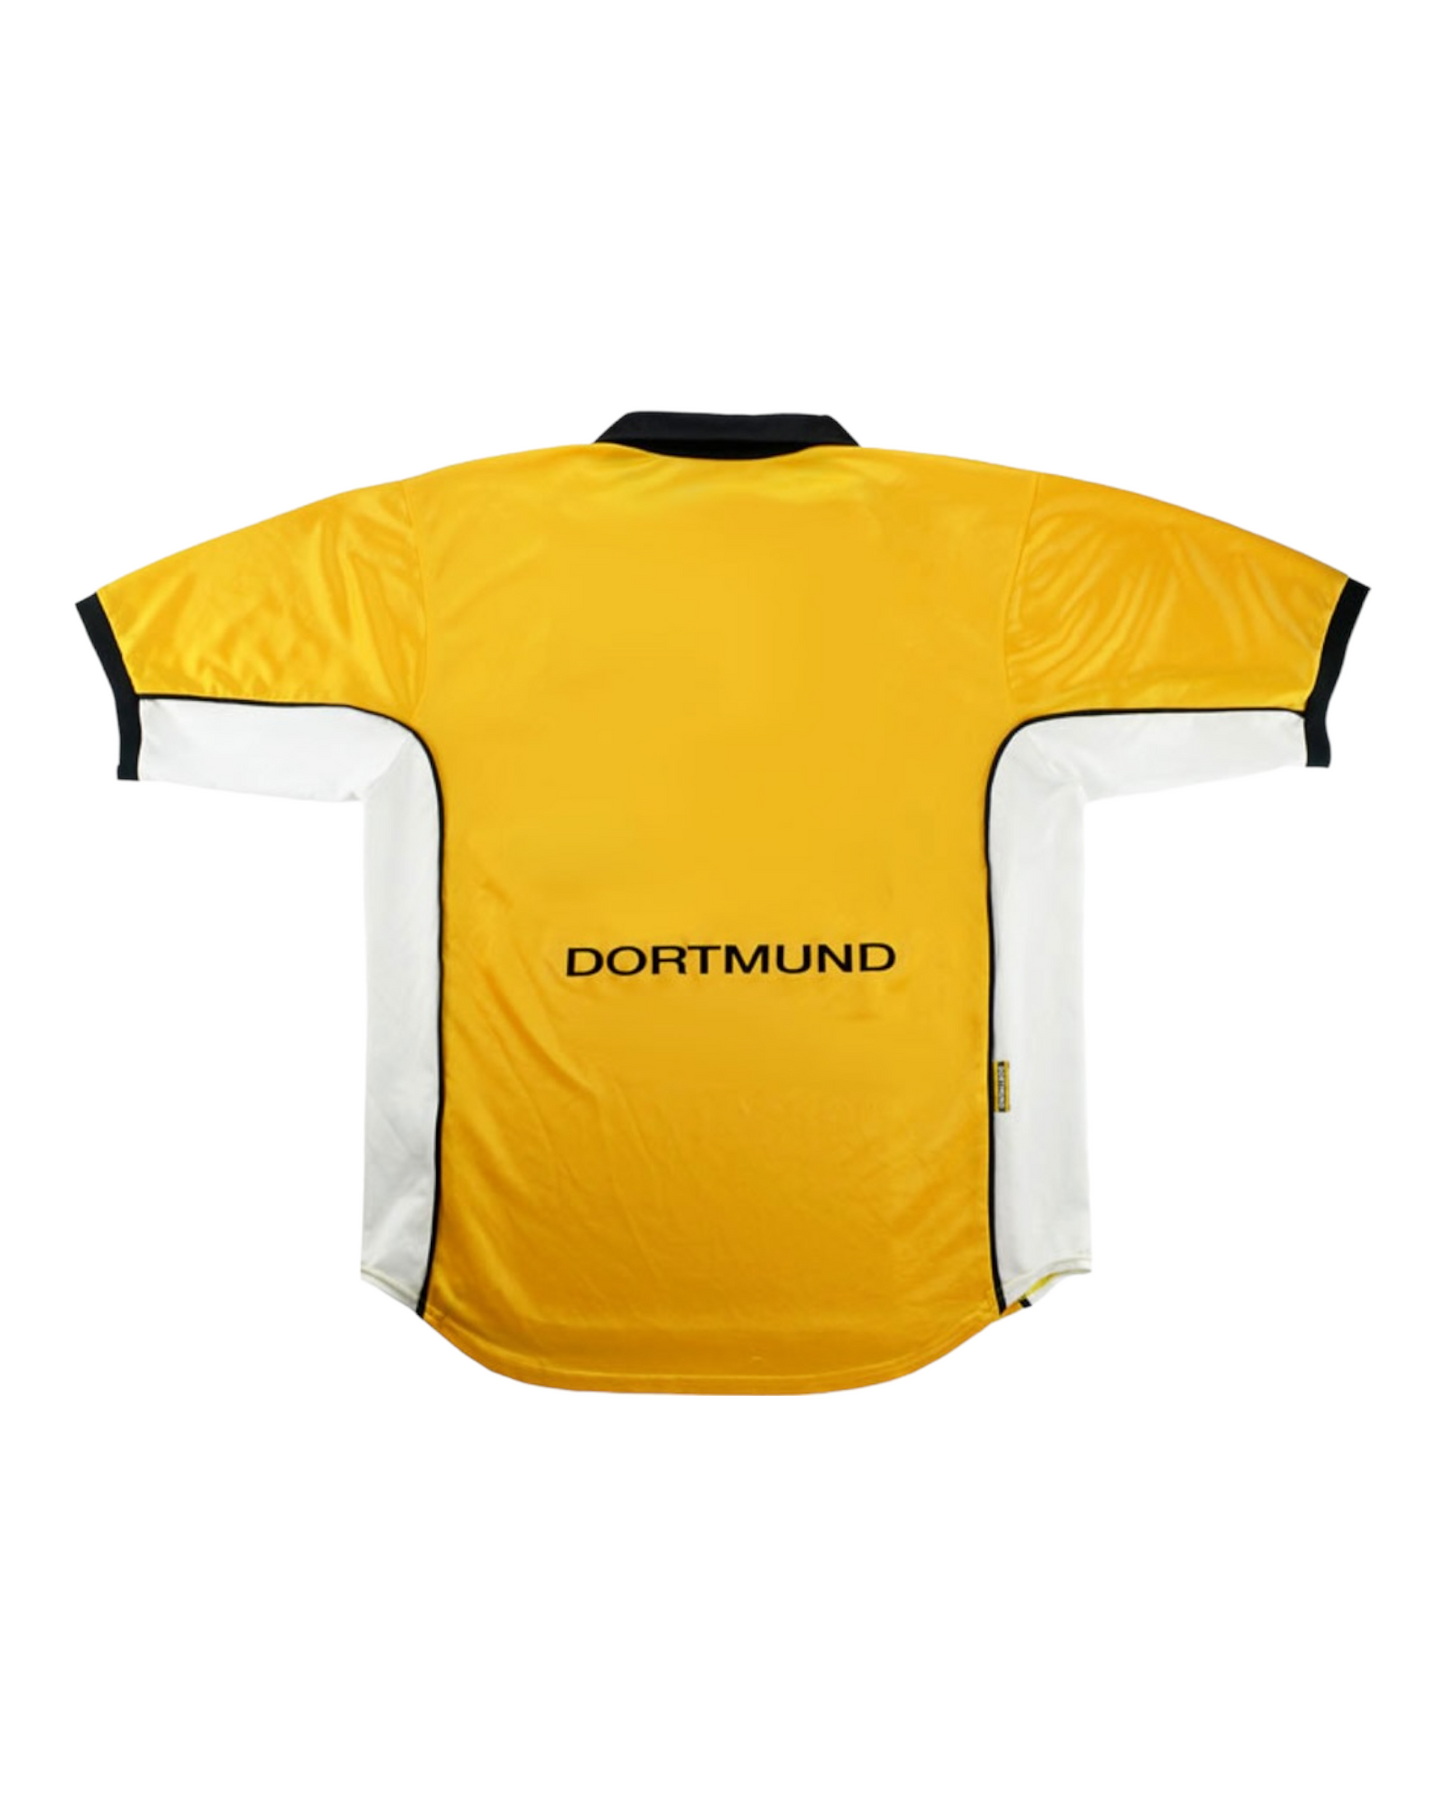 Borussia Dortmund BVB Nike Team 1998 1999 Home Football Shirt Size M Yellow S. Oliver Nike Fit